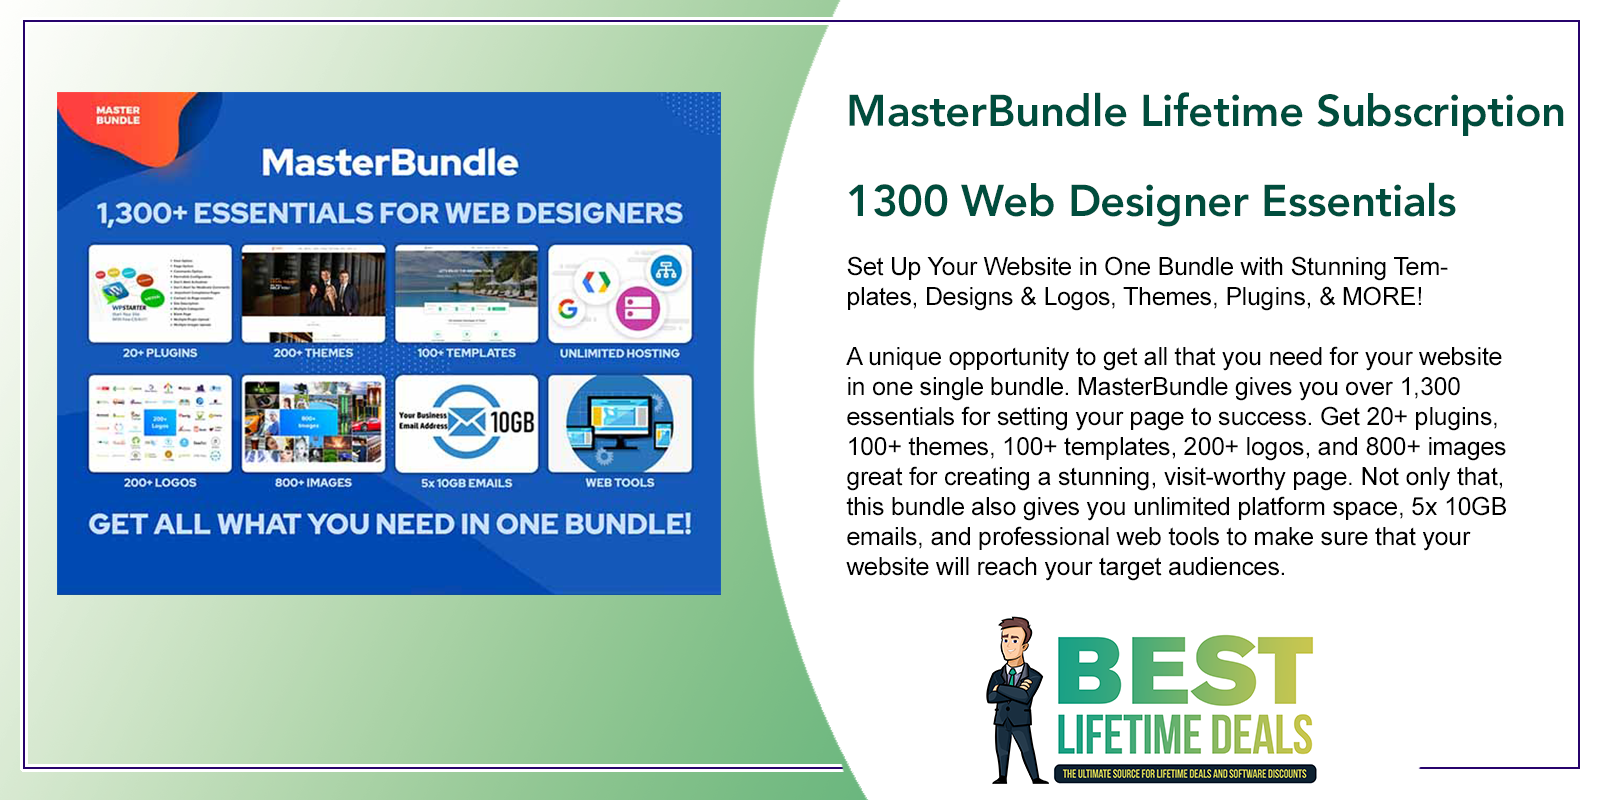 MasterBundle Lifetime Subscription 1300 Web Designer Essentials Featured Image